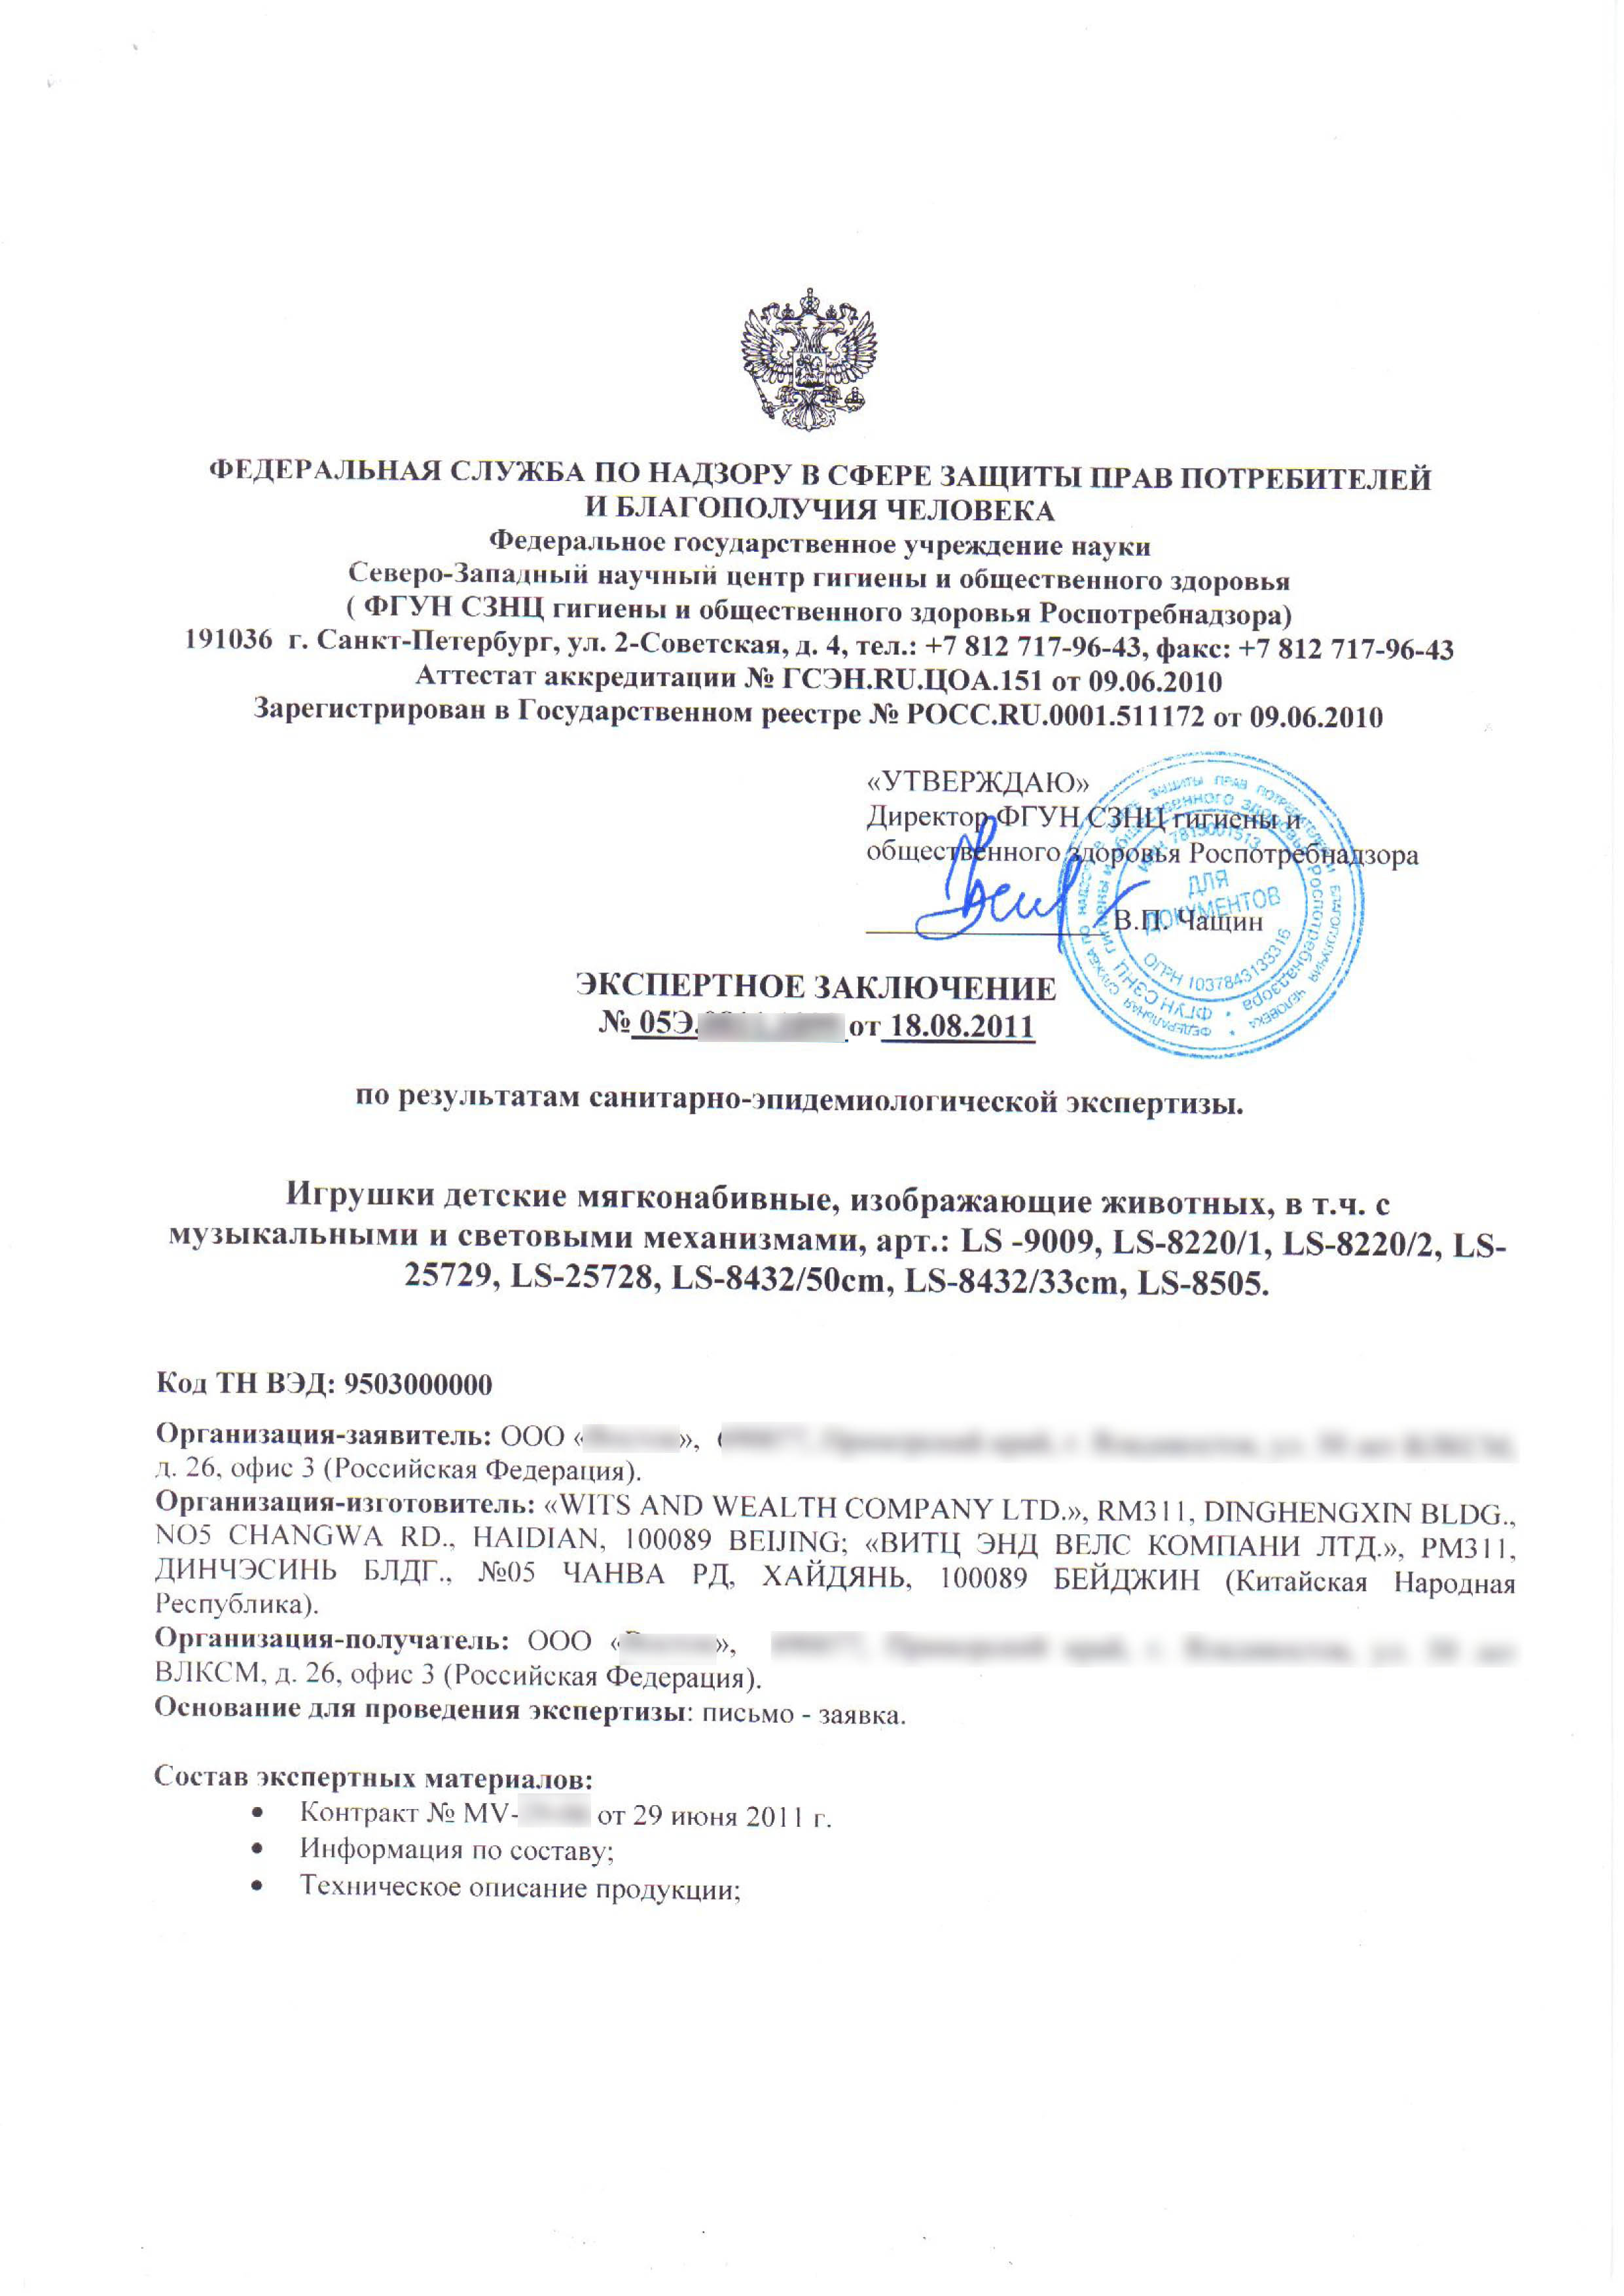 Permissive Document of Customs Union EurAsEC